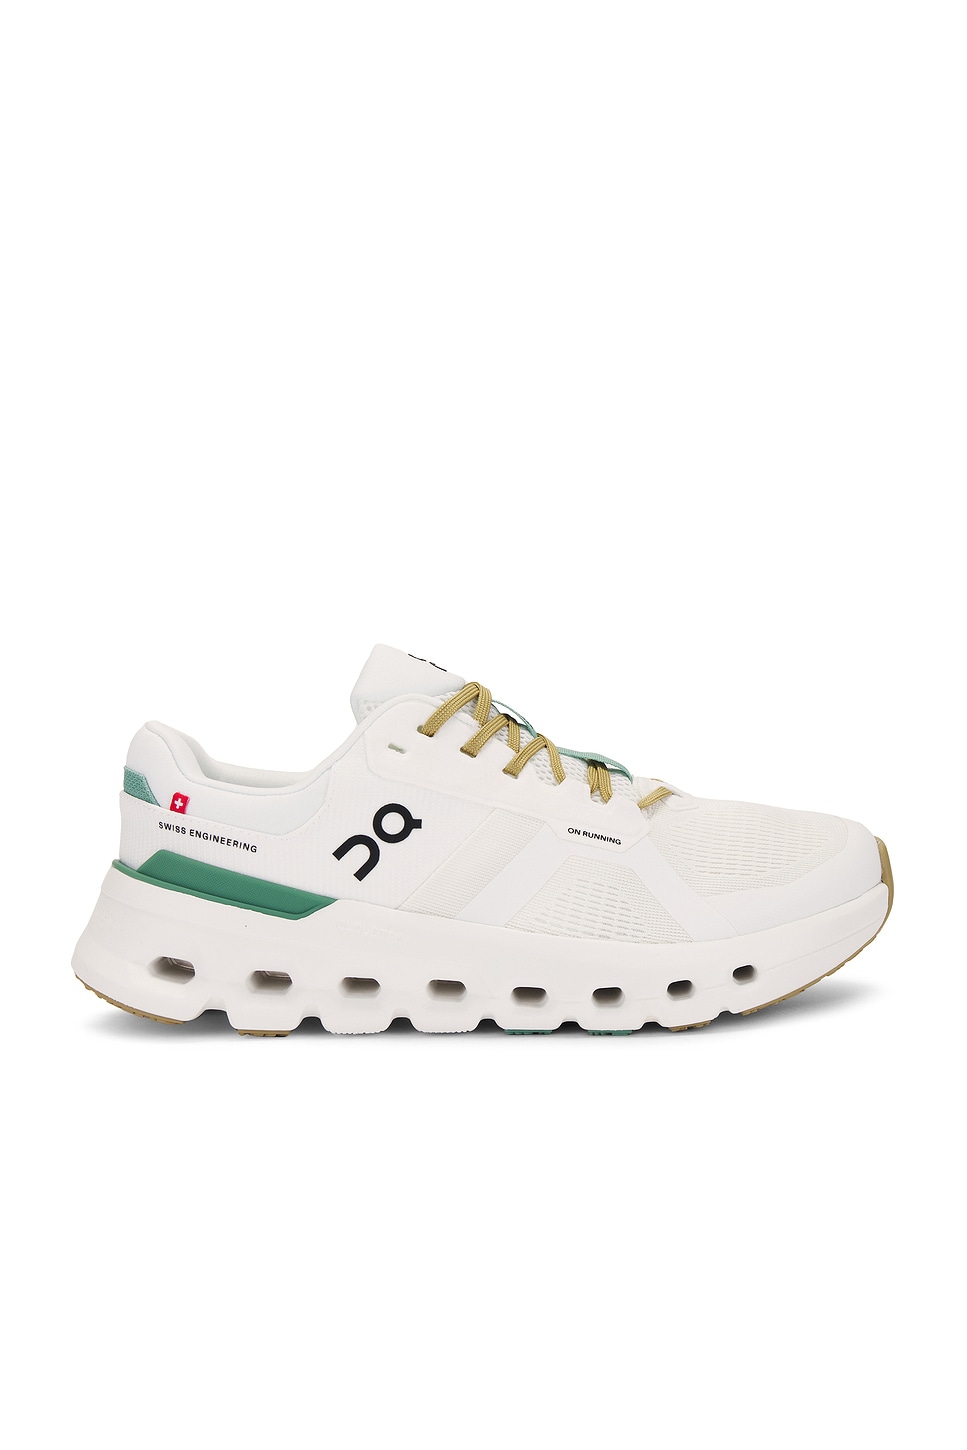 Cloudrunner 2 Sneaker in Olive